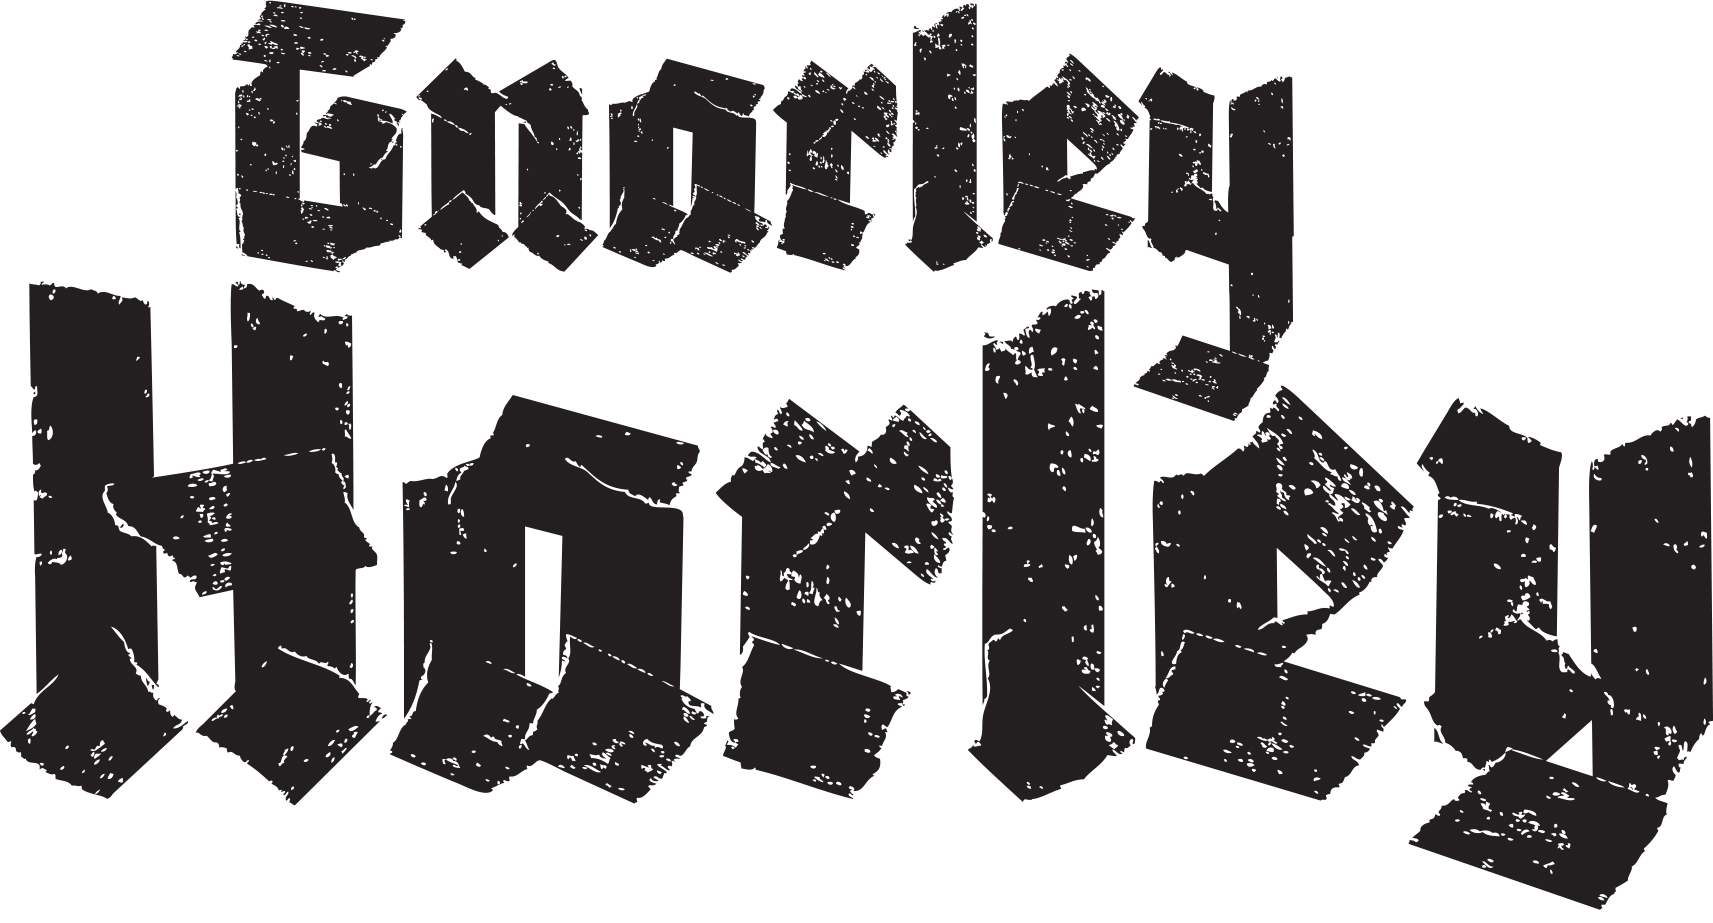 Gnarley Harley Fundraiser for ALS